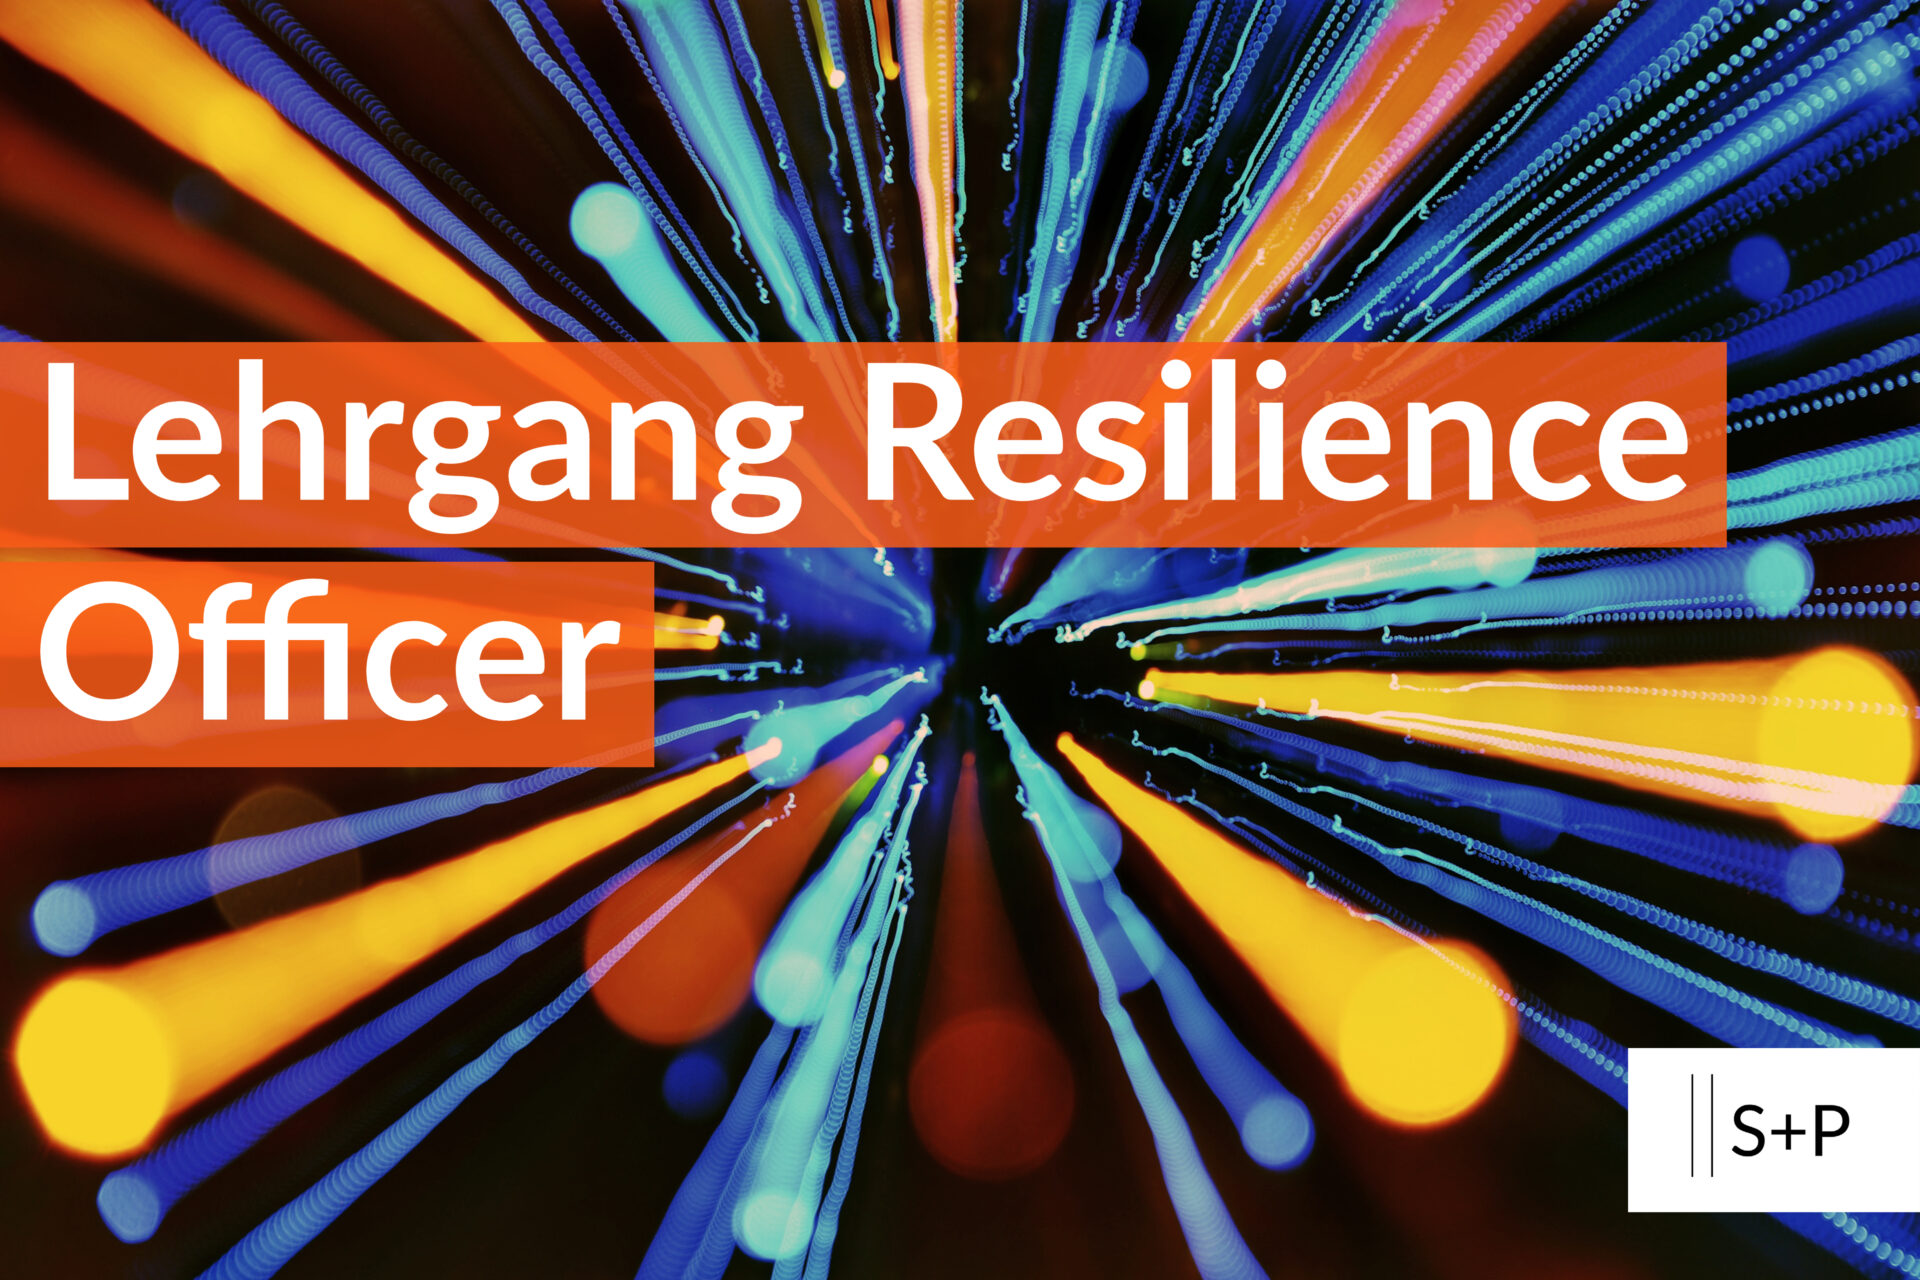 Lehrgang Resilience Officer